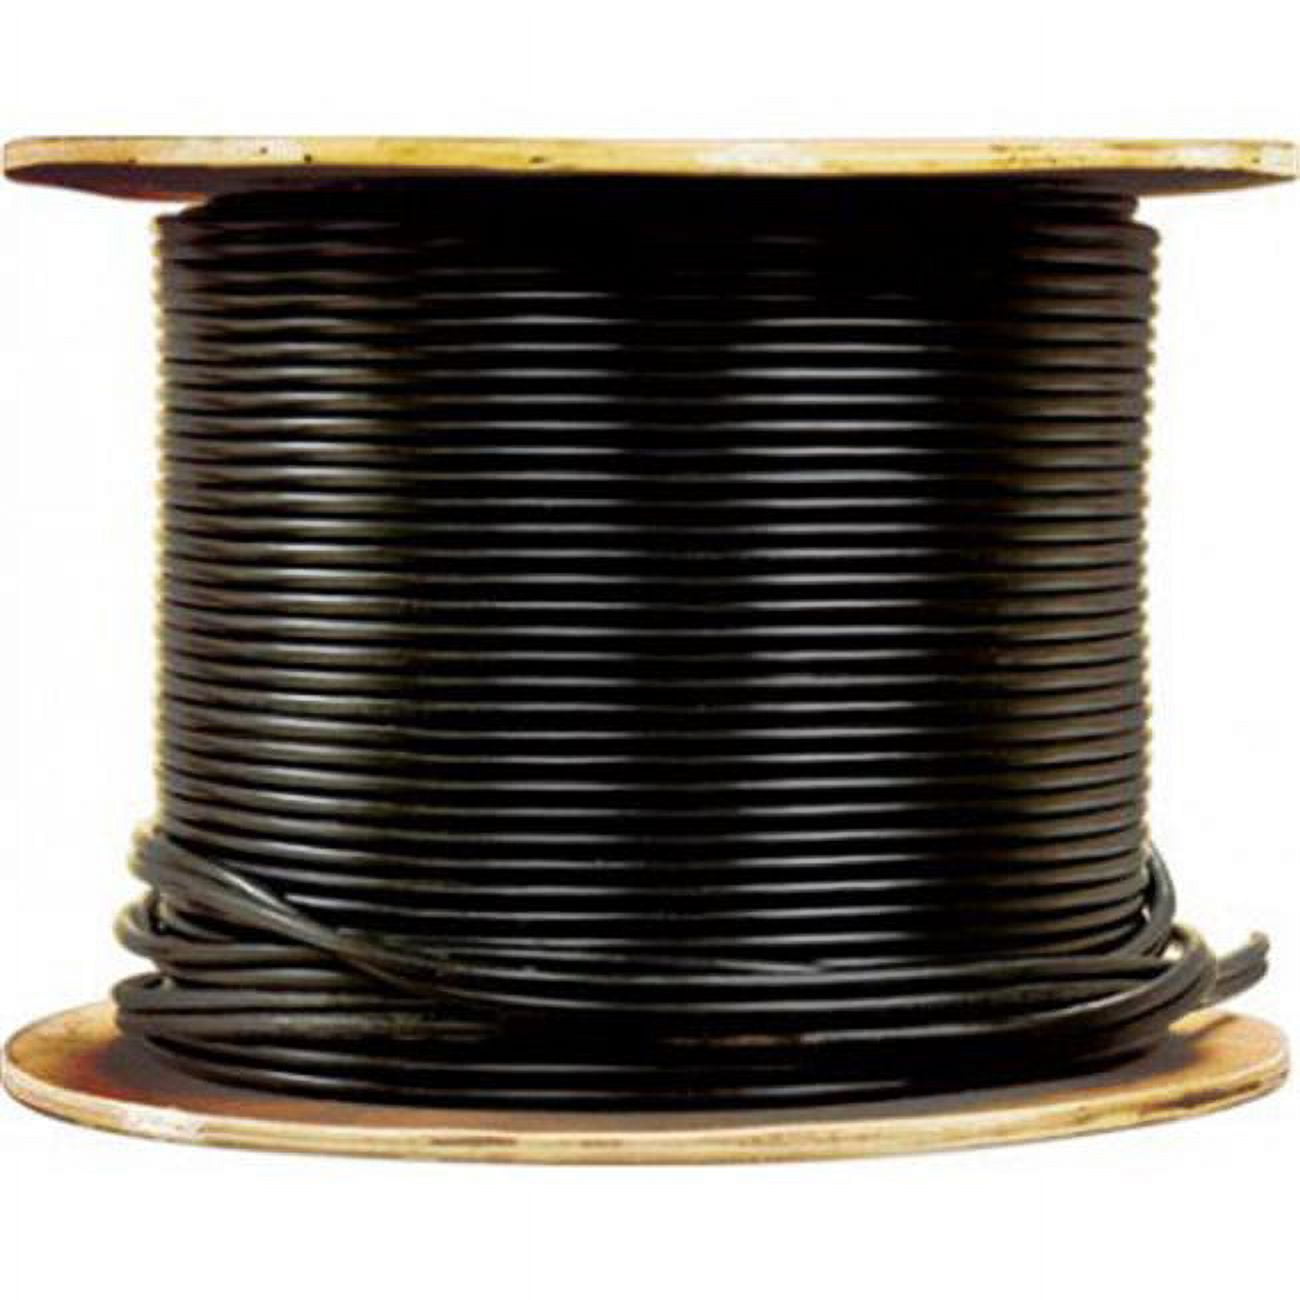 Lvw-10-500 10-2 Gauge Low Voltage Wire With 500 Ft. Spool - Black